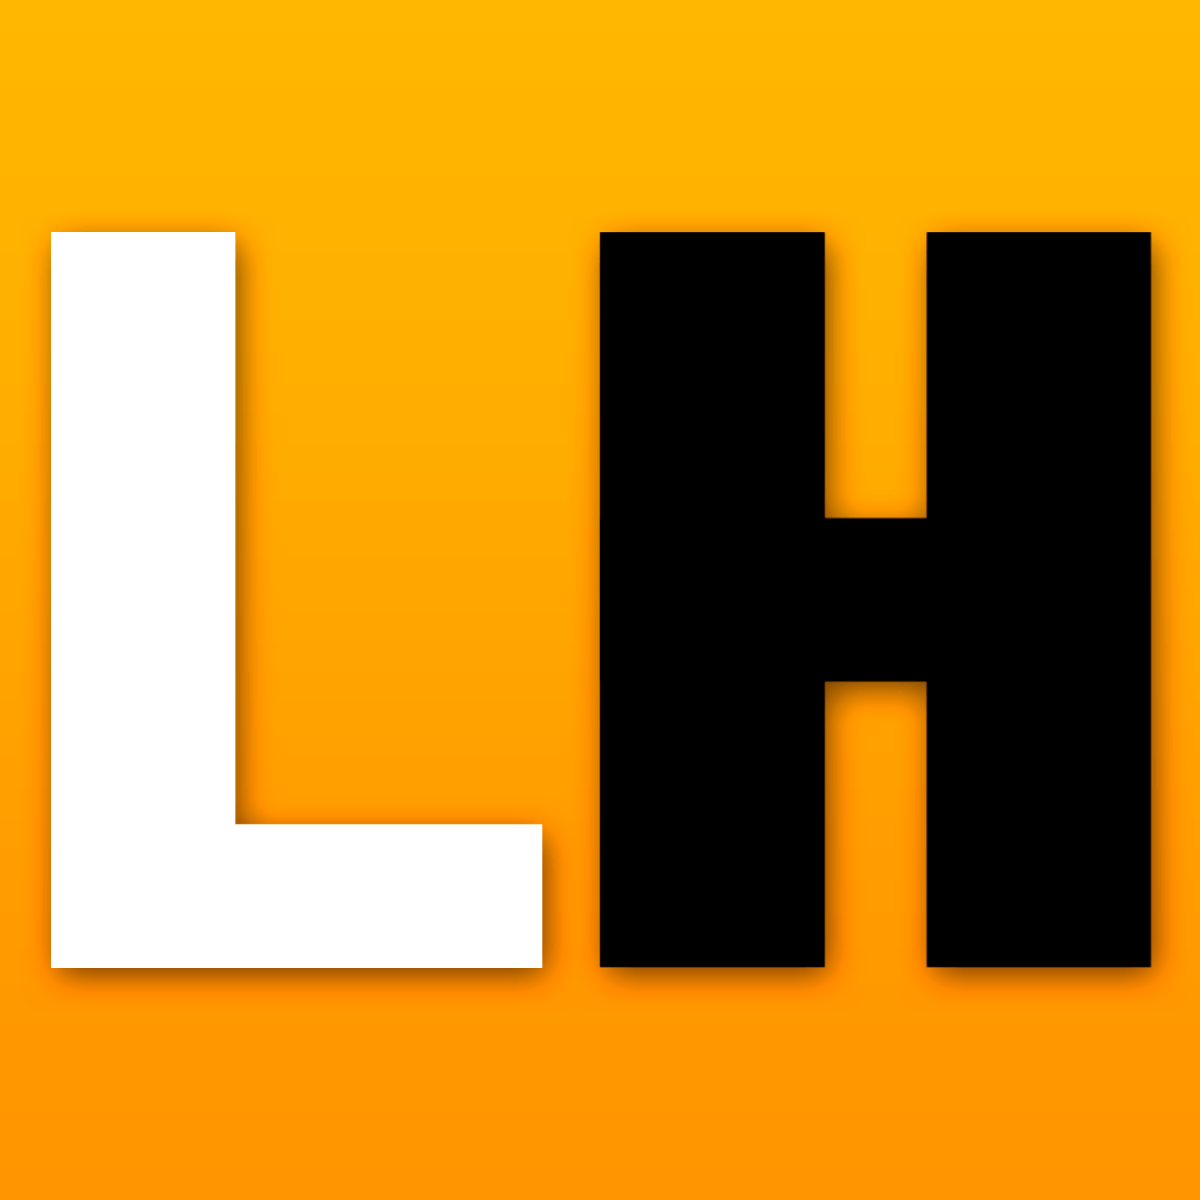 LeadHit